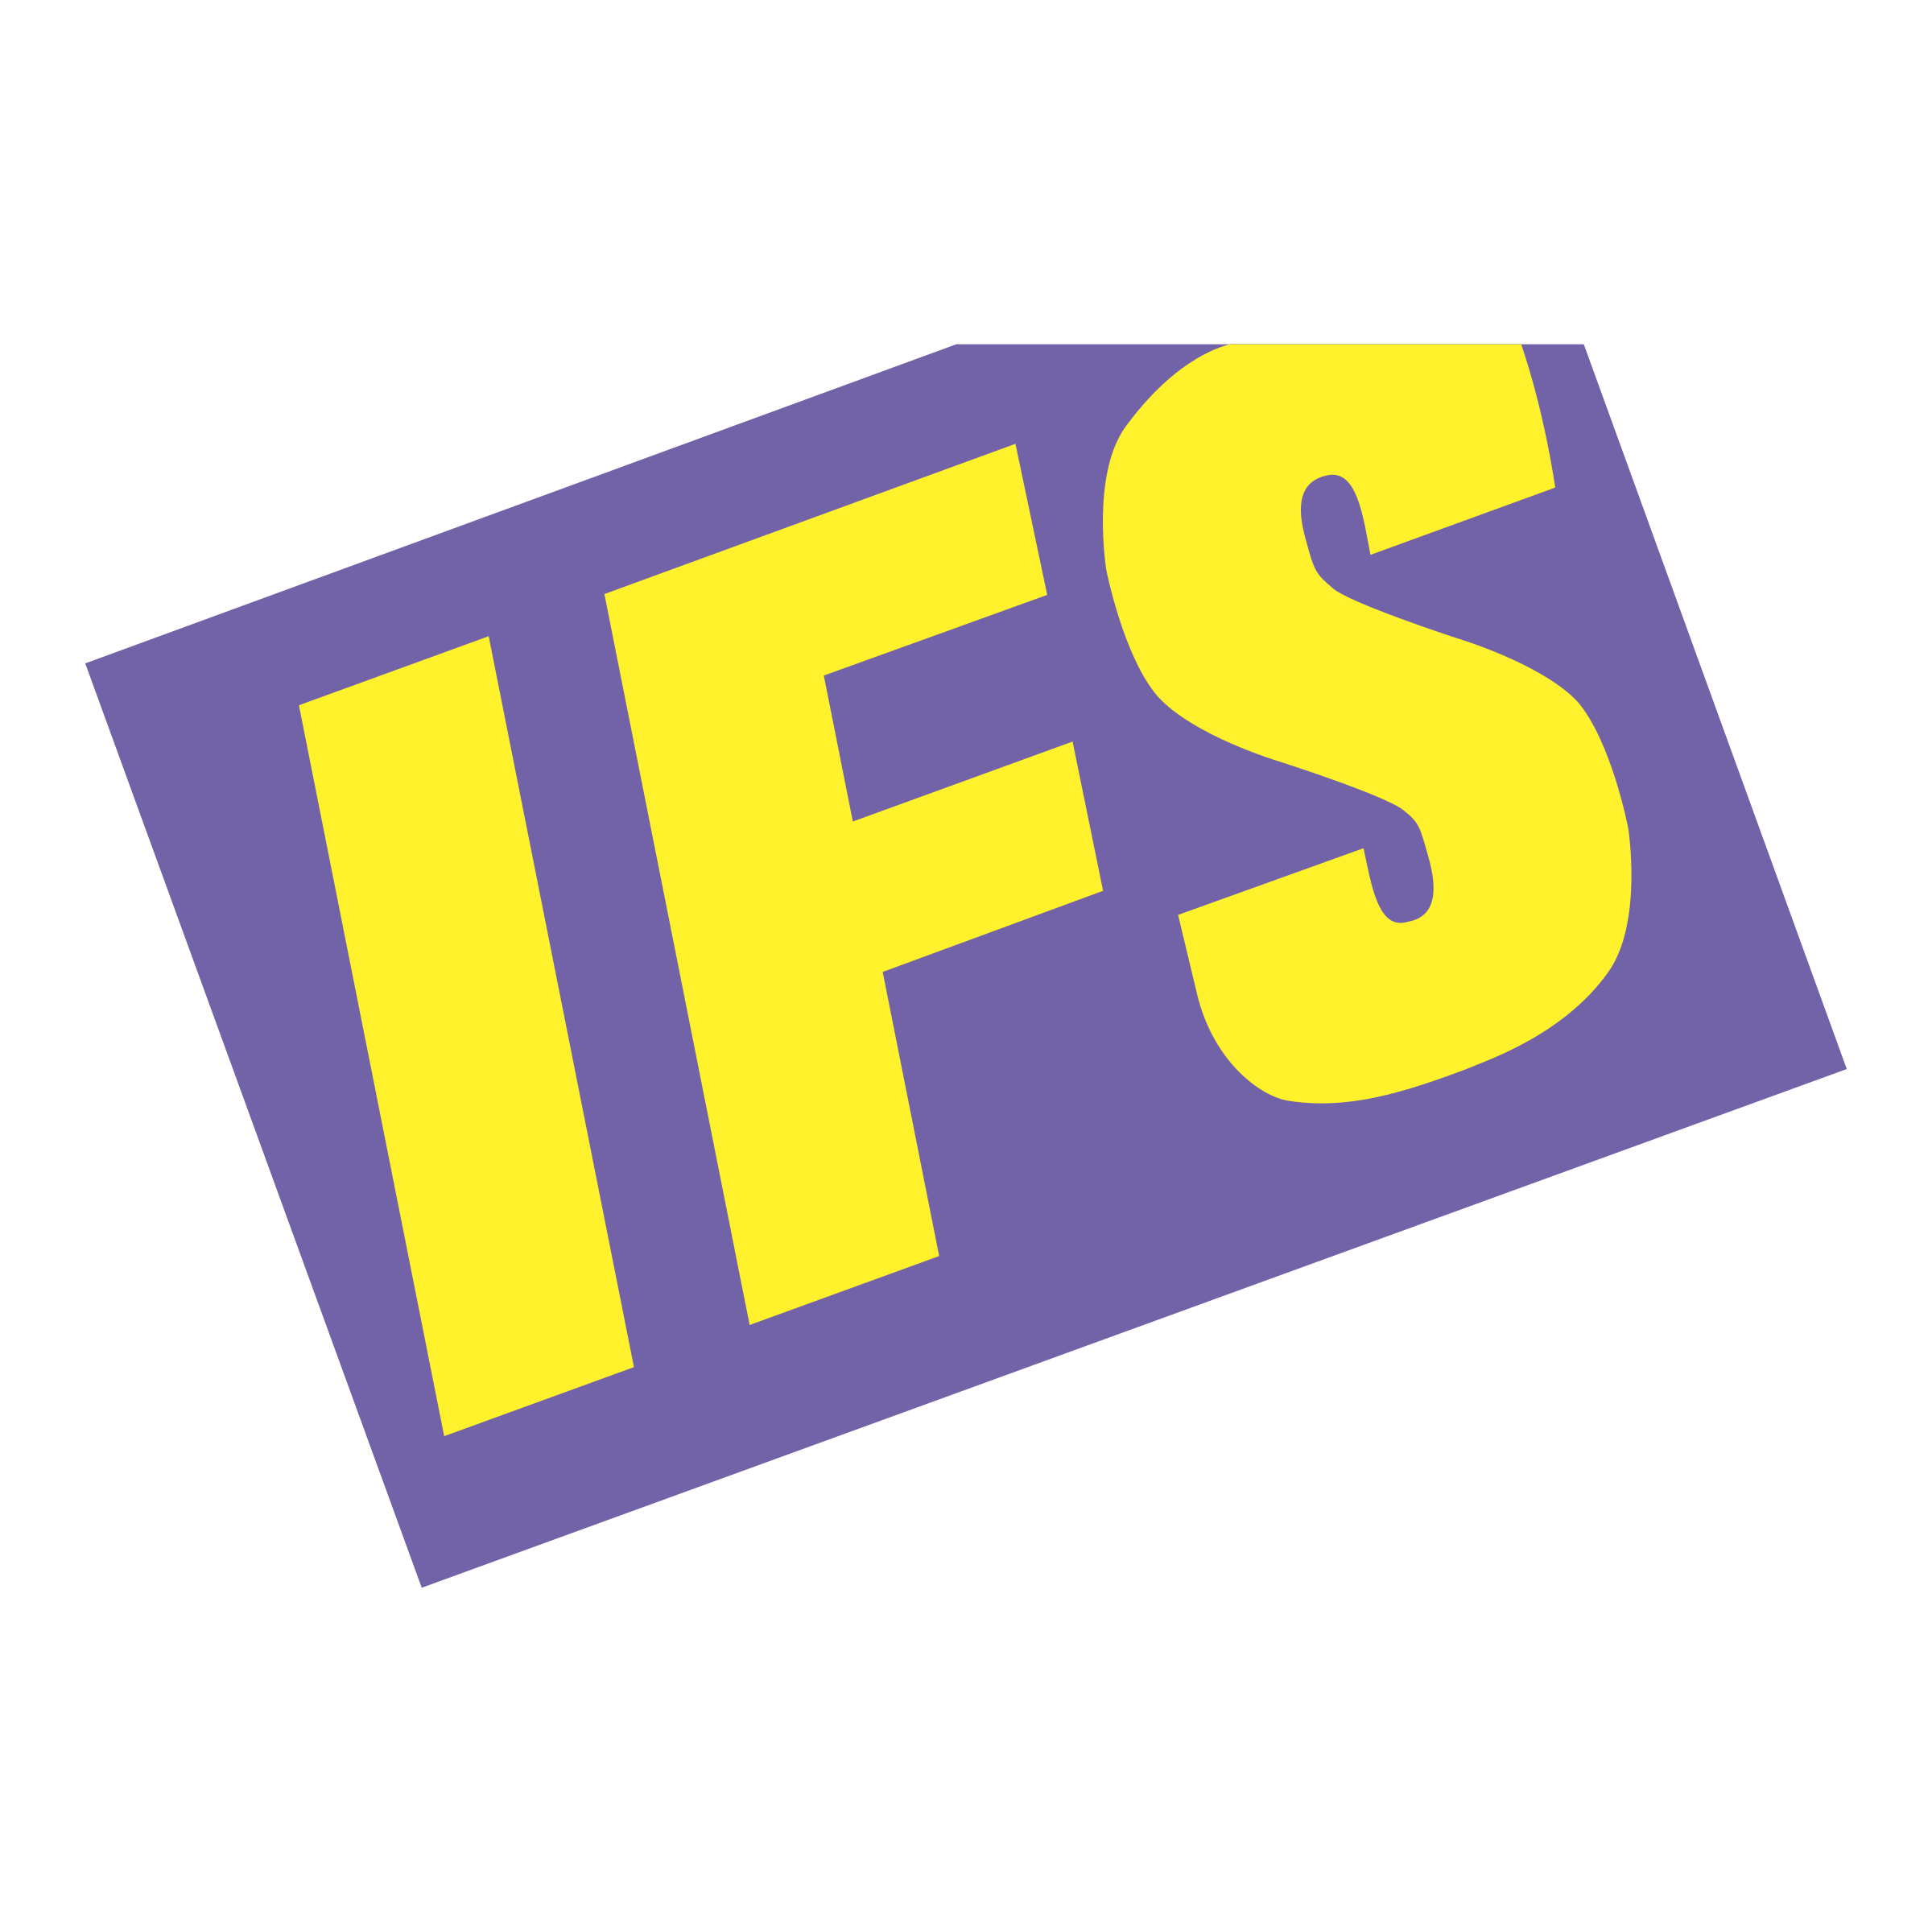 IFS Logo - IFS Logo PNG Transparent & SVG Vector - Freebie Supply